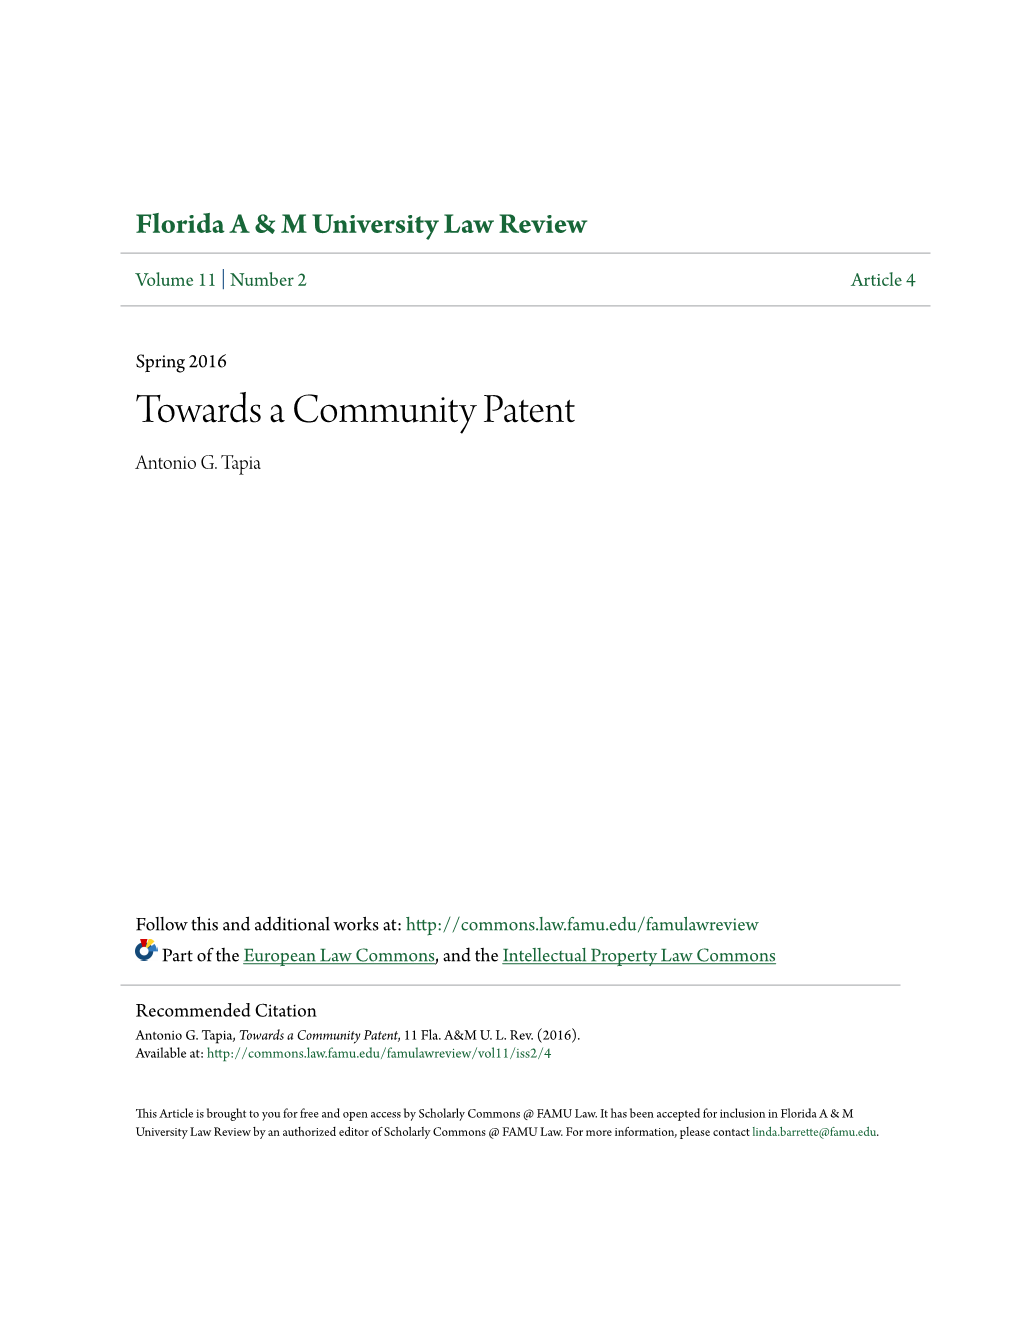 Towards a Community Patent Antonio G